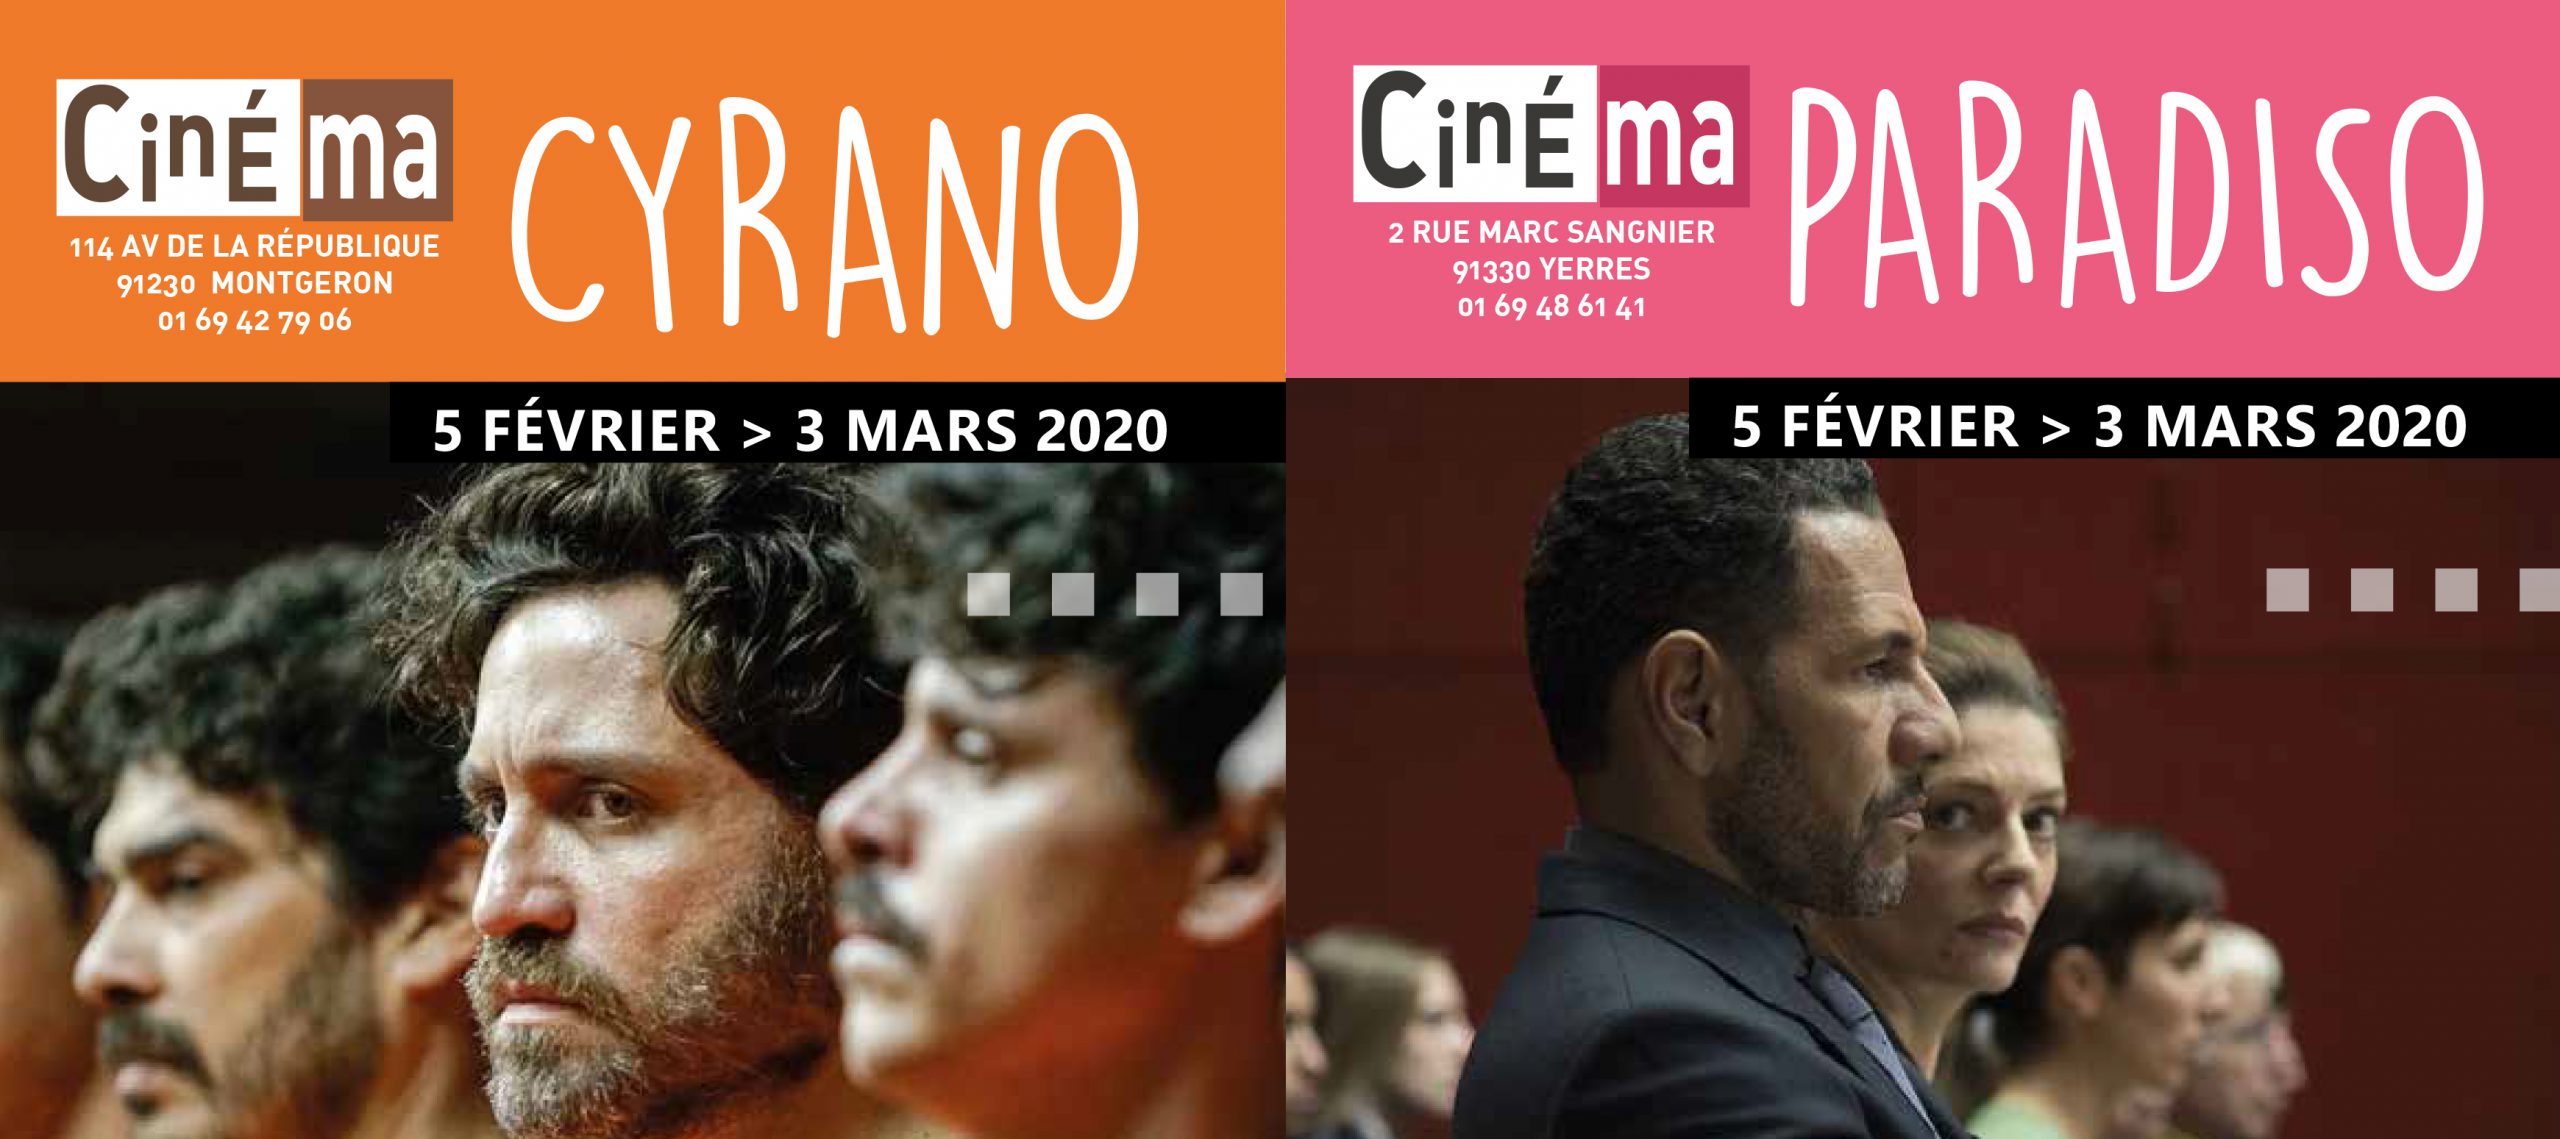 Programme du Cyrano et du Paradiso février 2020